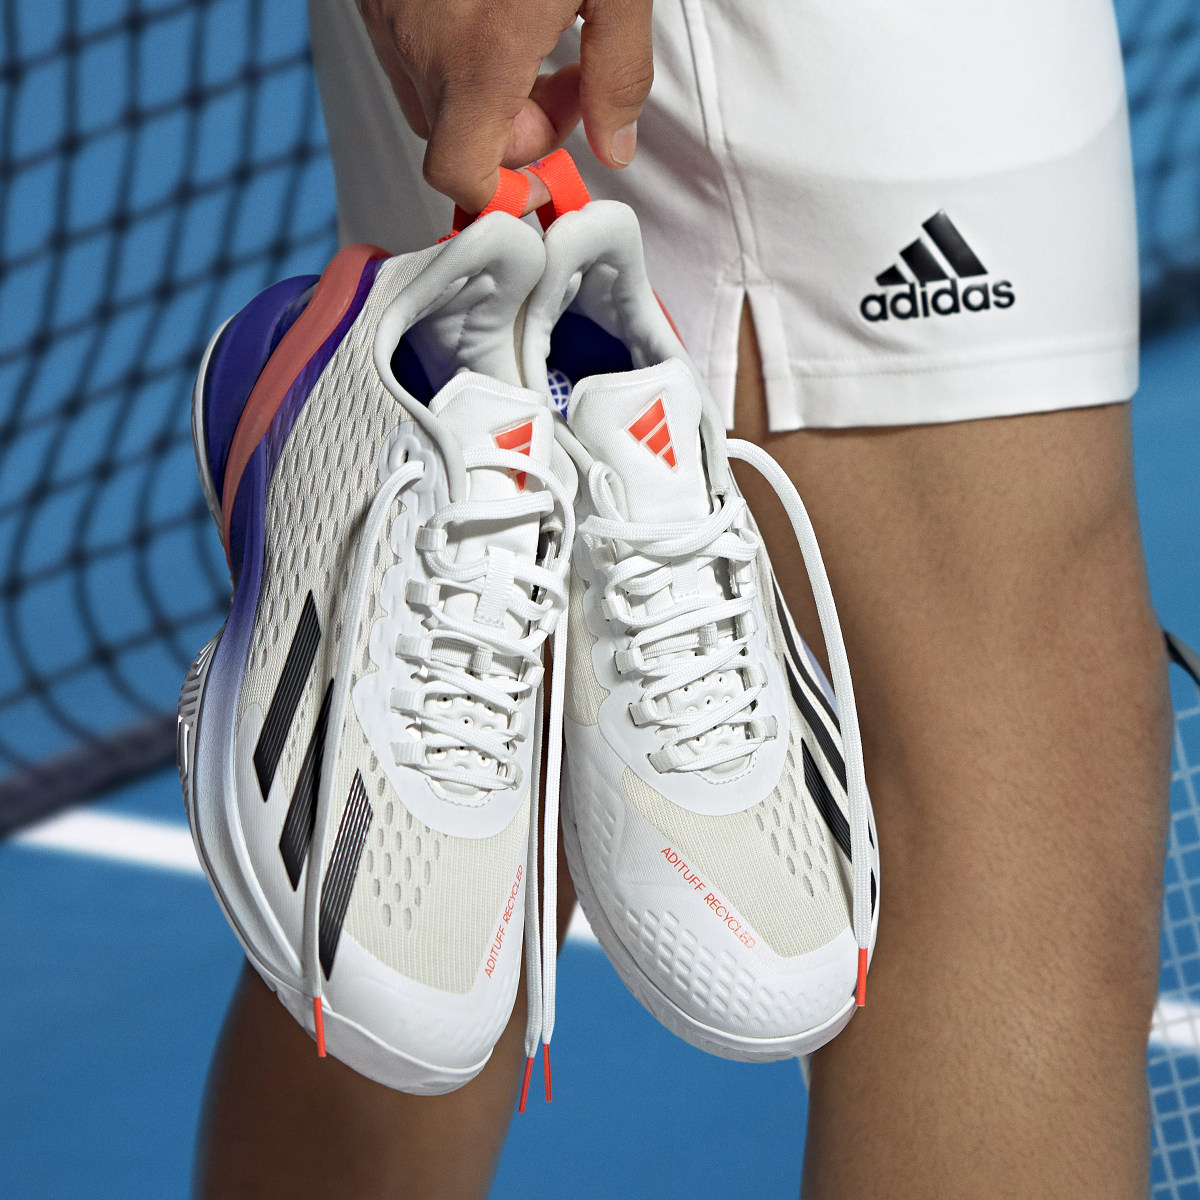 Adidas adizero Cybersonic Tenis Ayakkabısı. 6